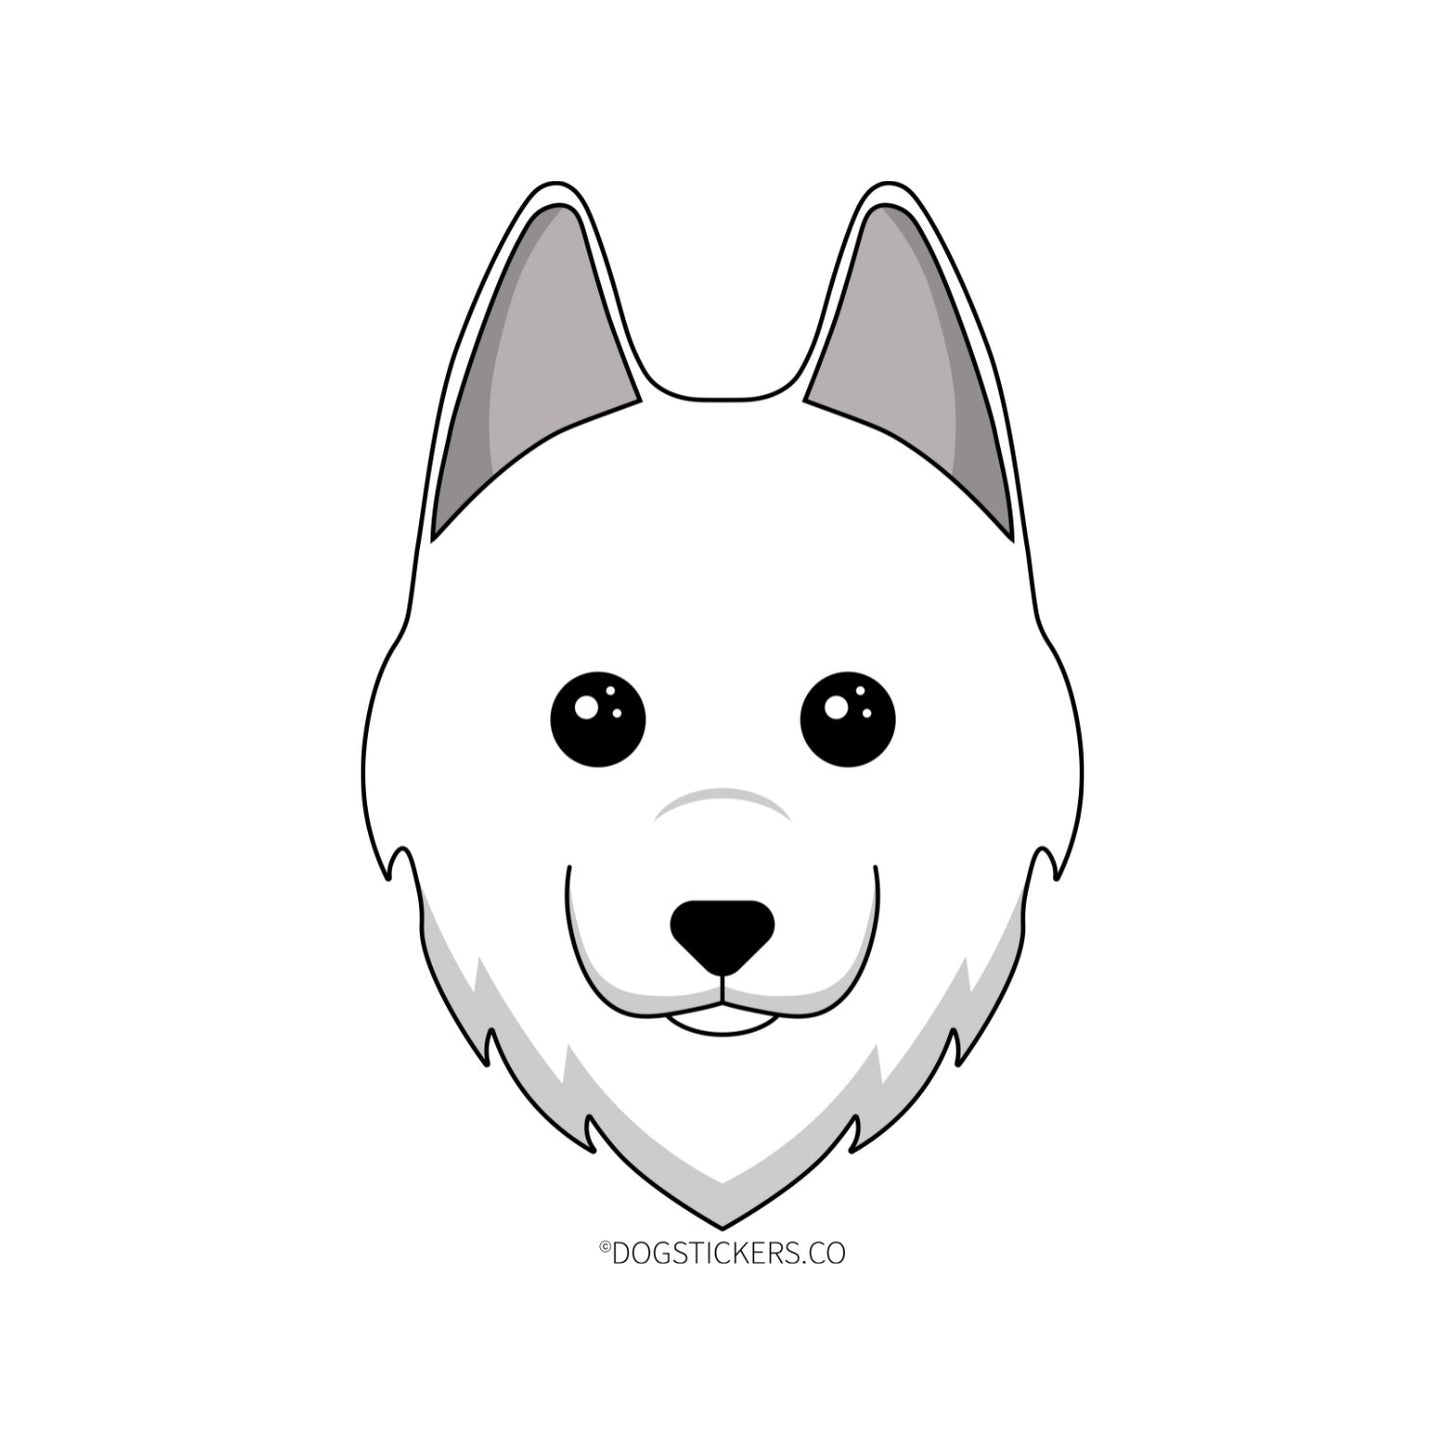 Siberian Husky Sticker - Dogstickers.co